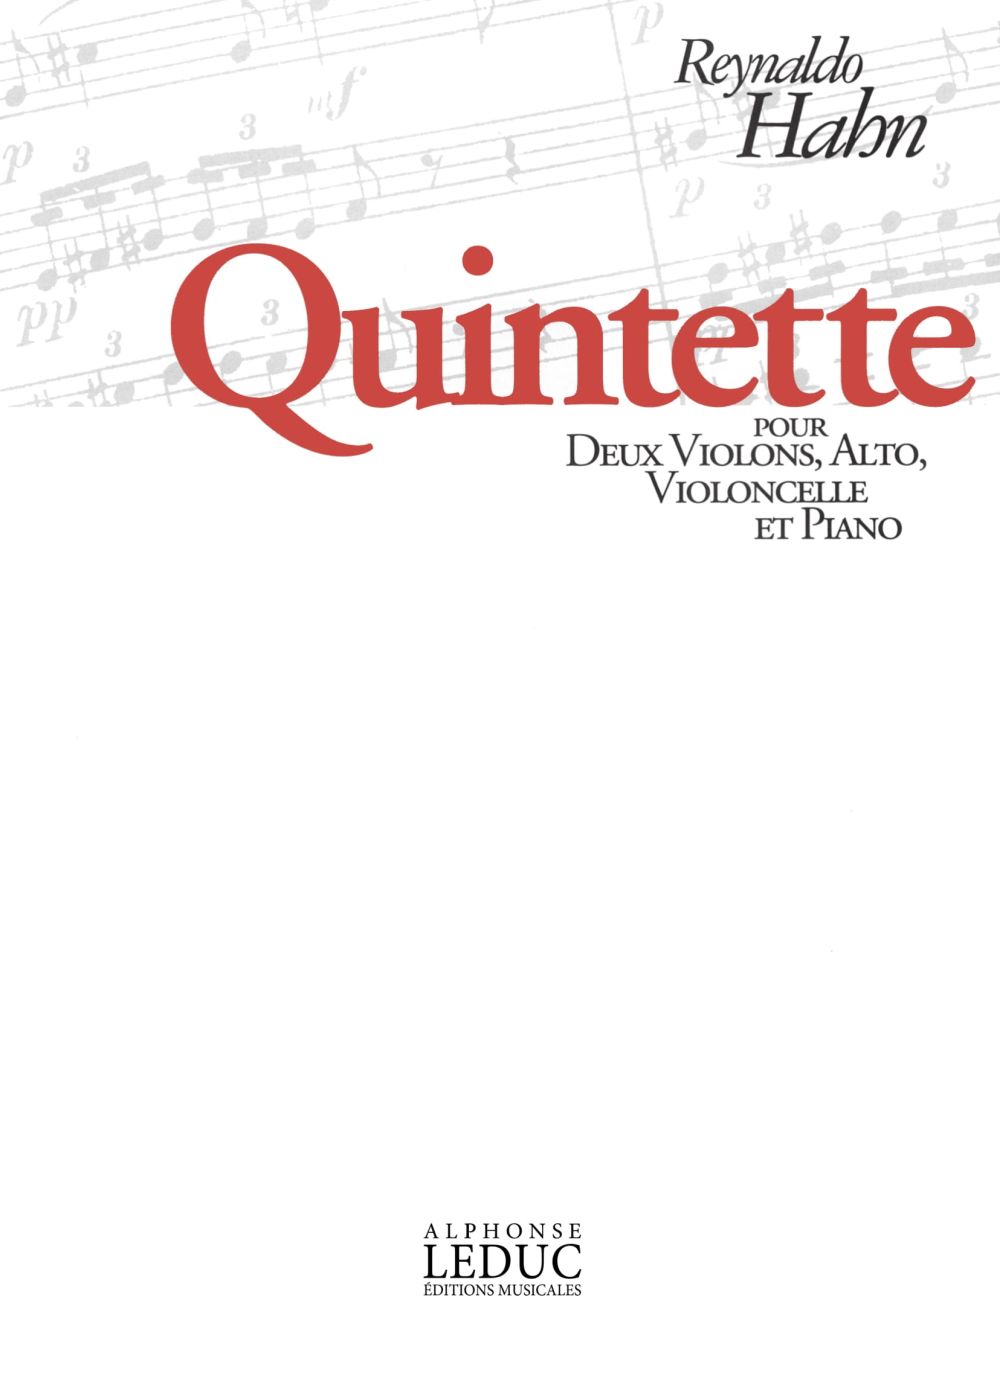 Reynaldo Hahn: Quintet For 2 Violins  Viola  Cello And Piano